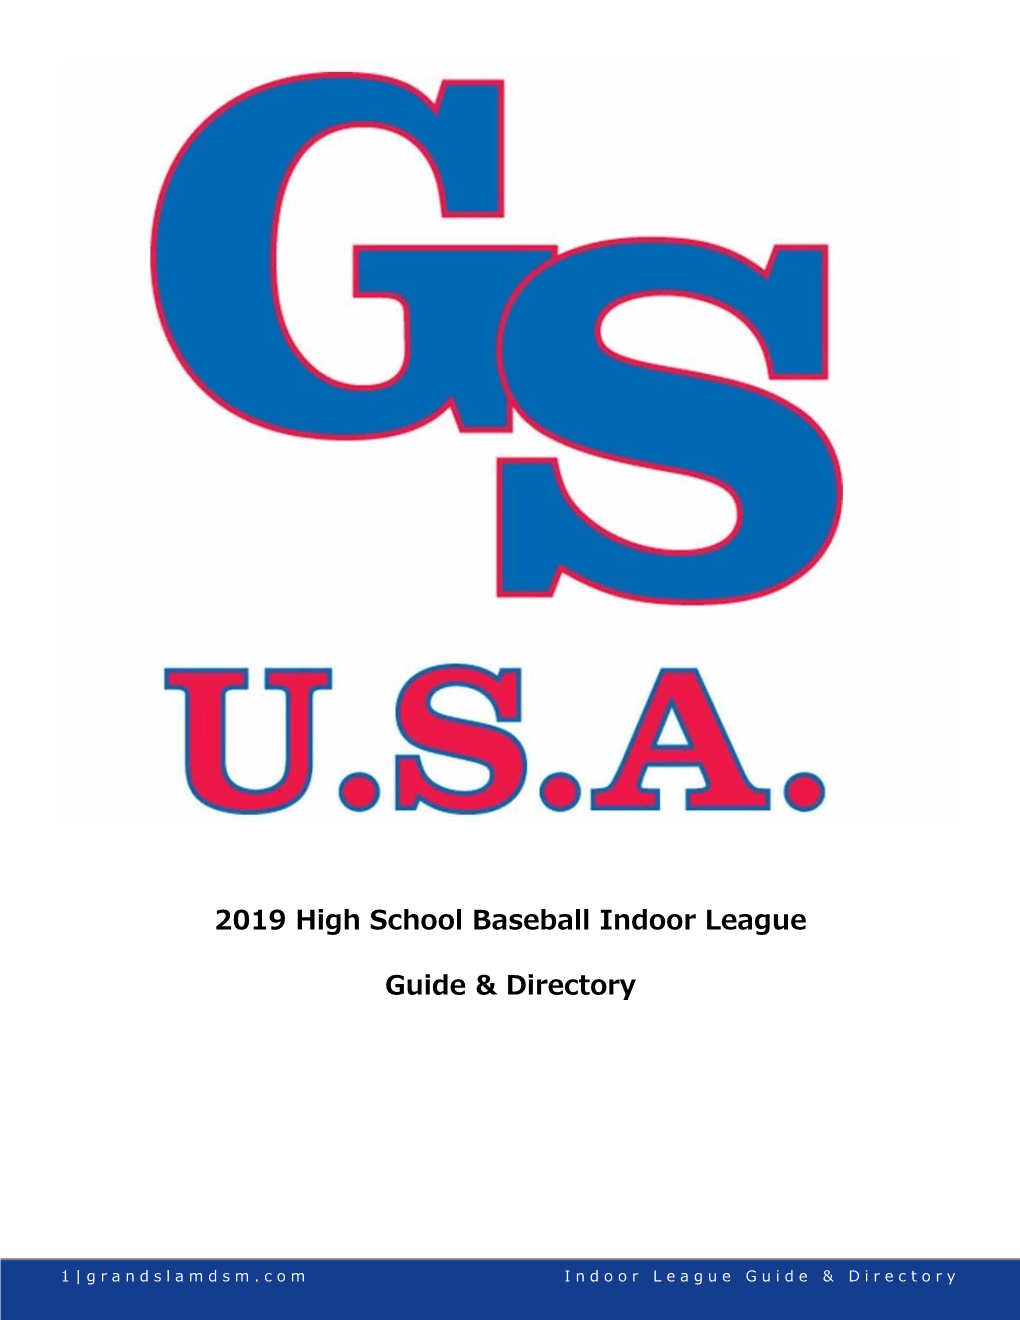 2019 High School Baseball Indoor League Guide & Directory